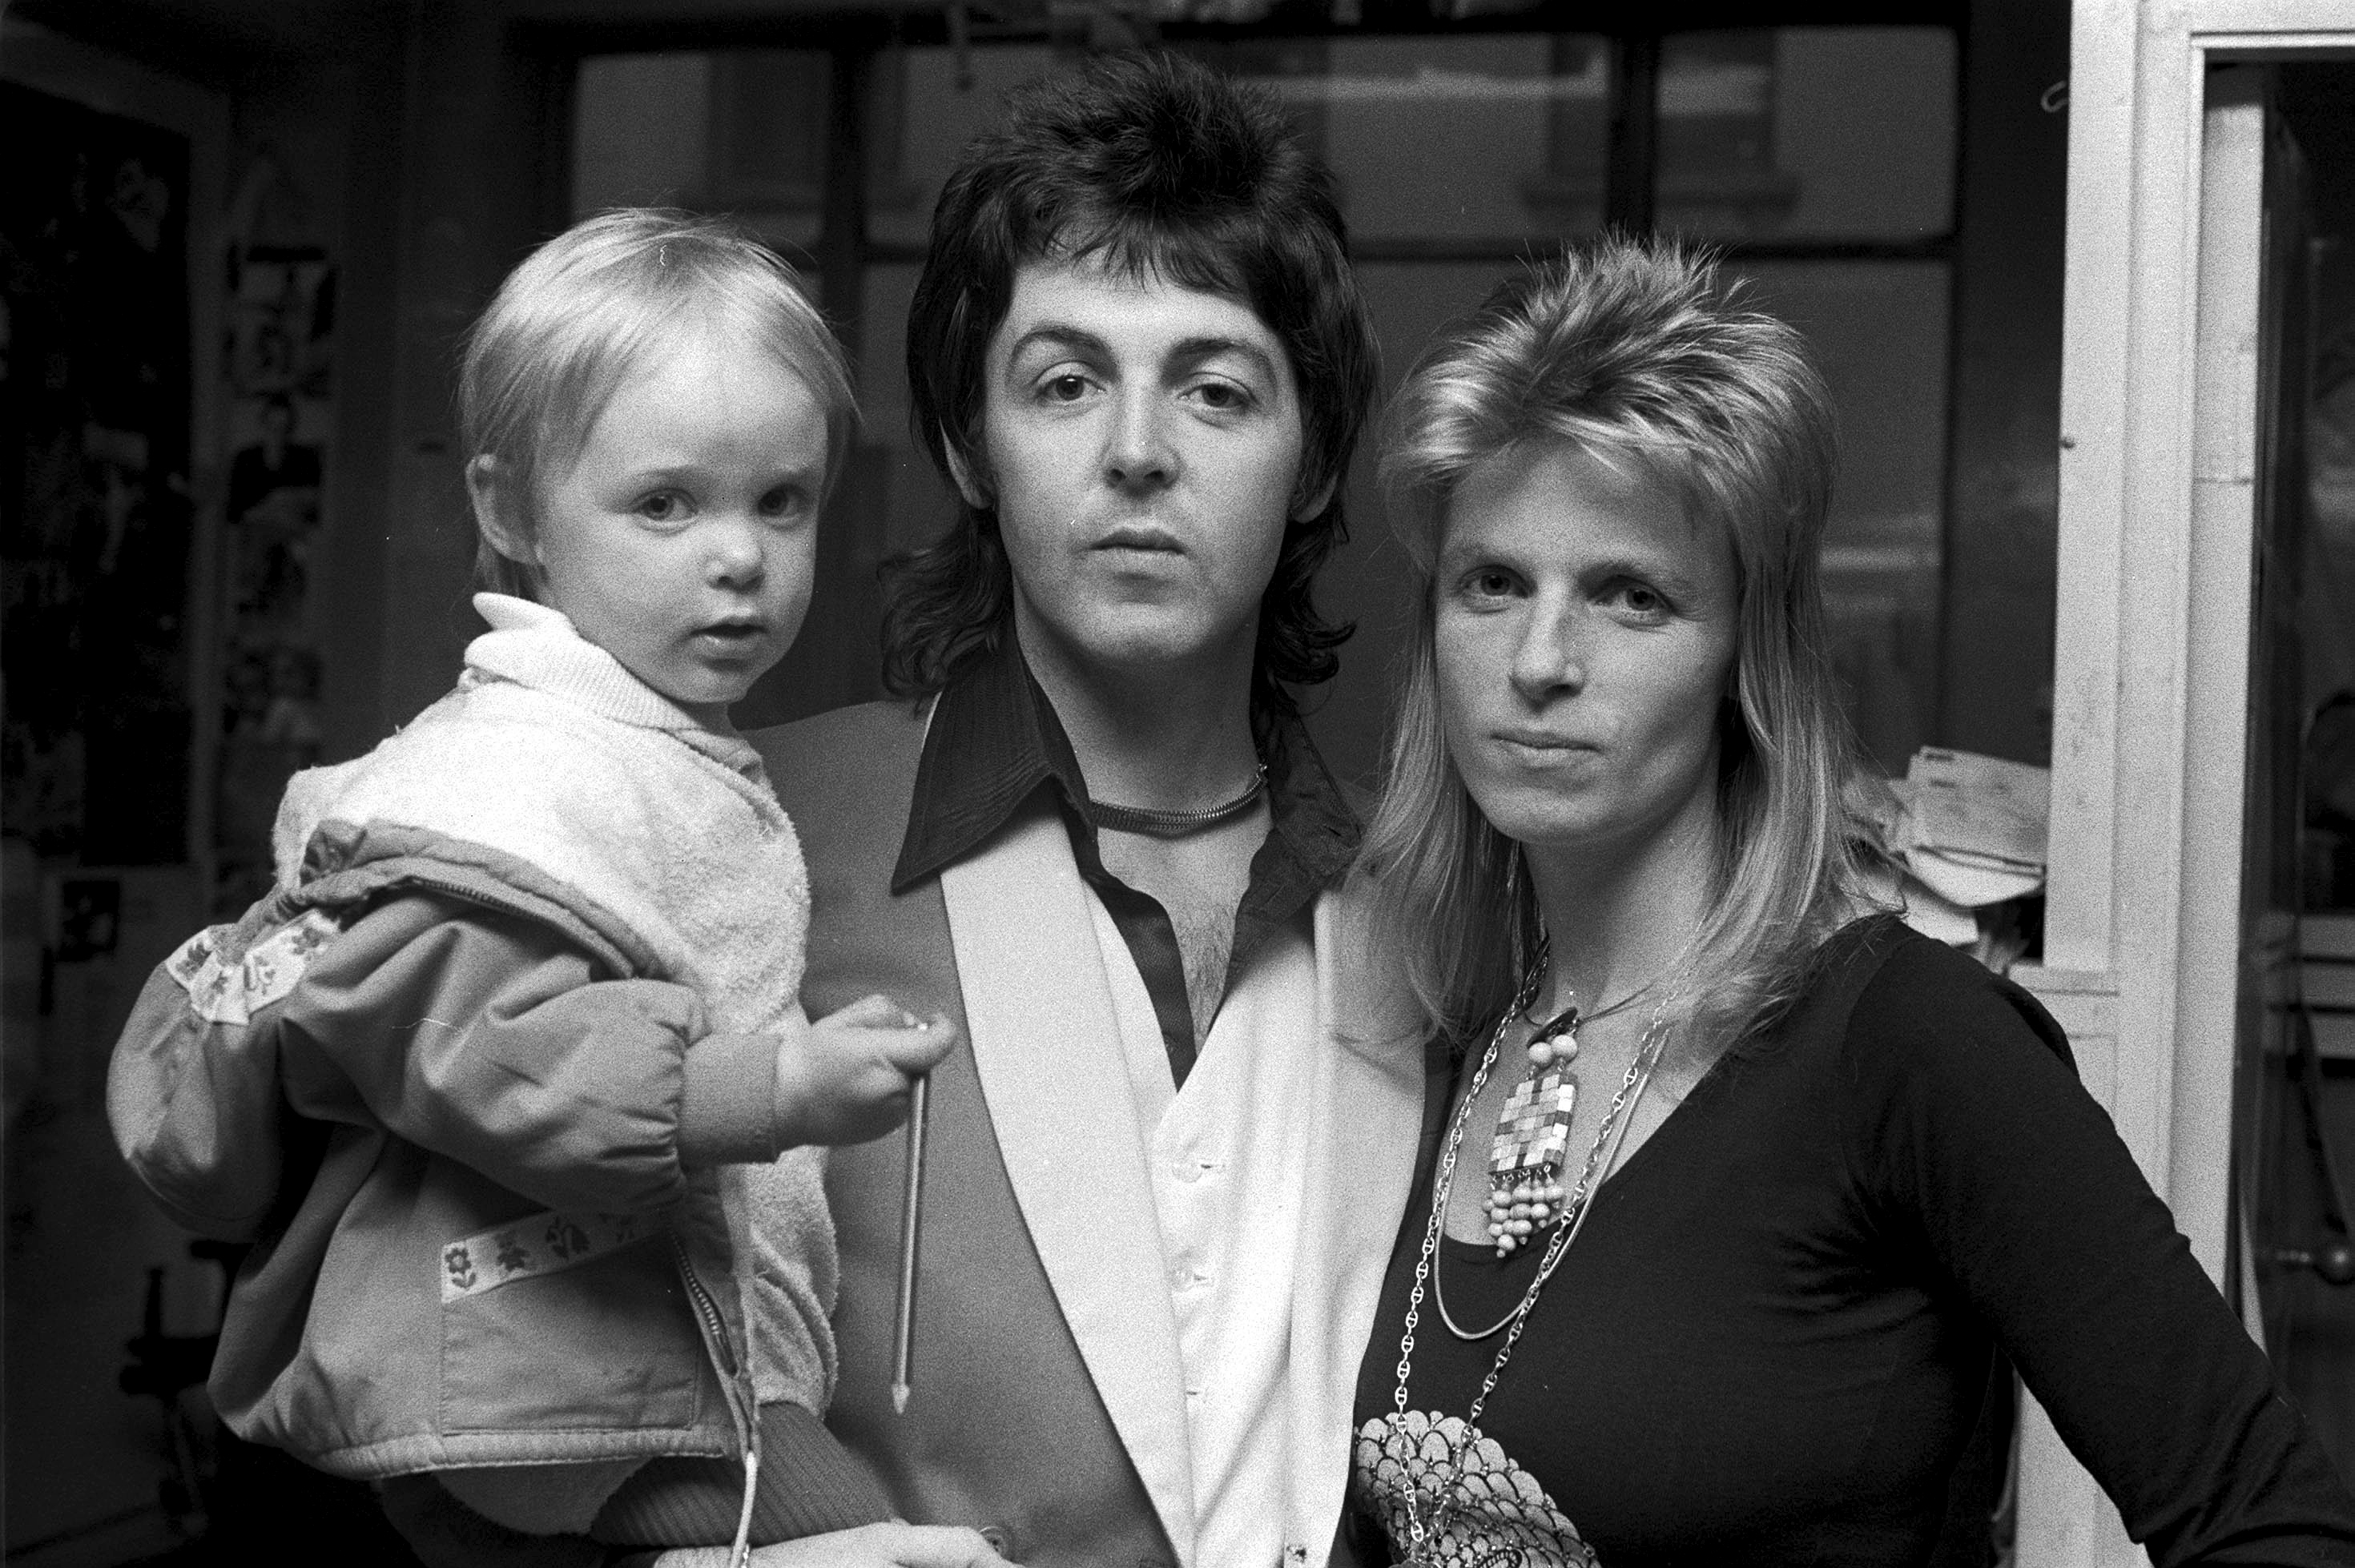 Linda McCartney, The Beatles' Paul McCartney, and Stella McCartney near a window